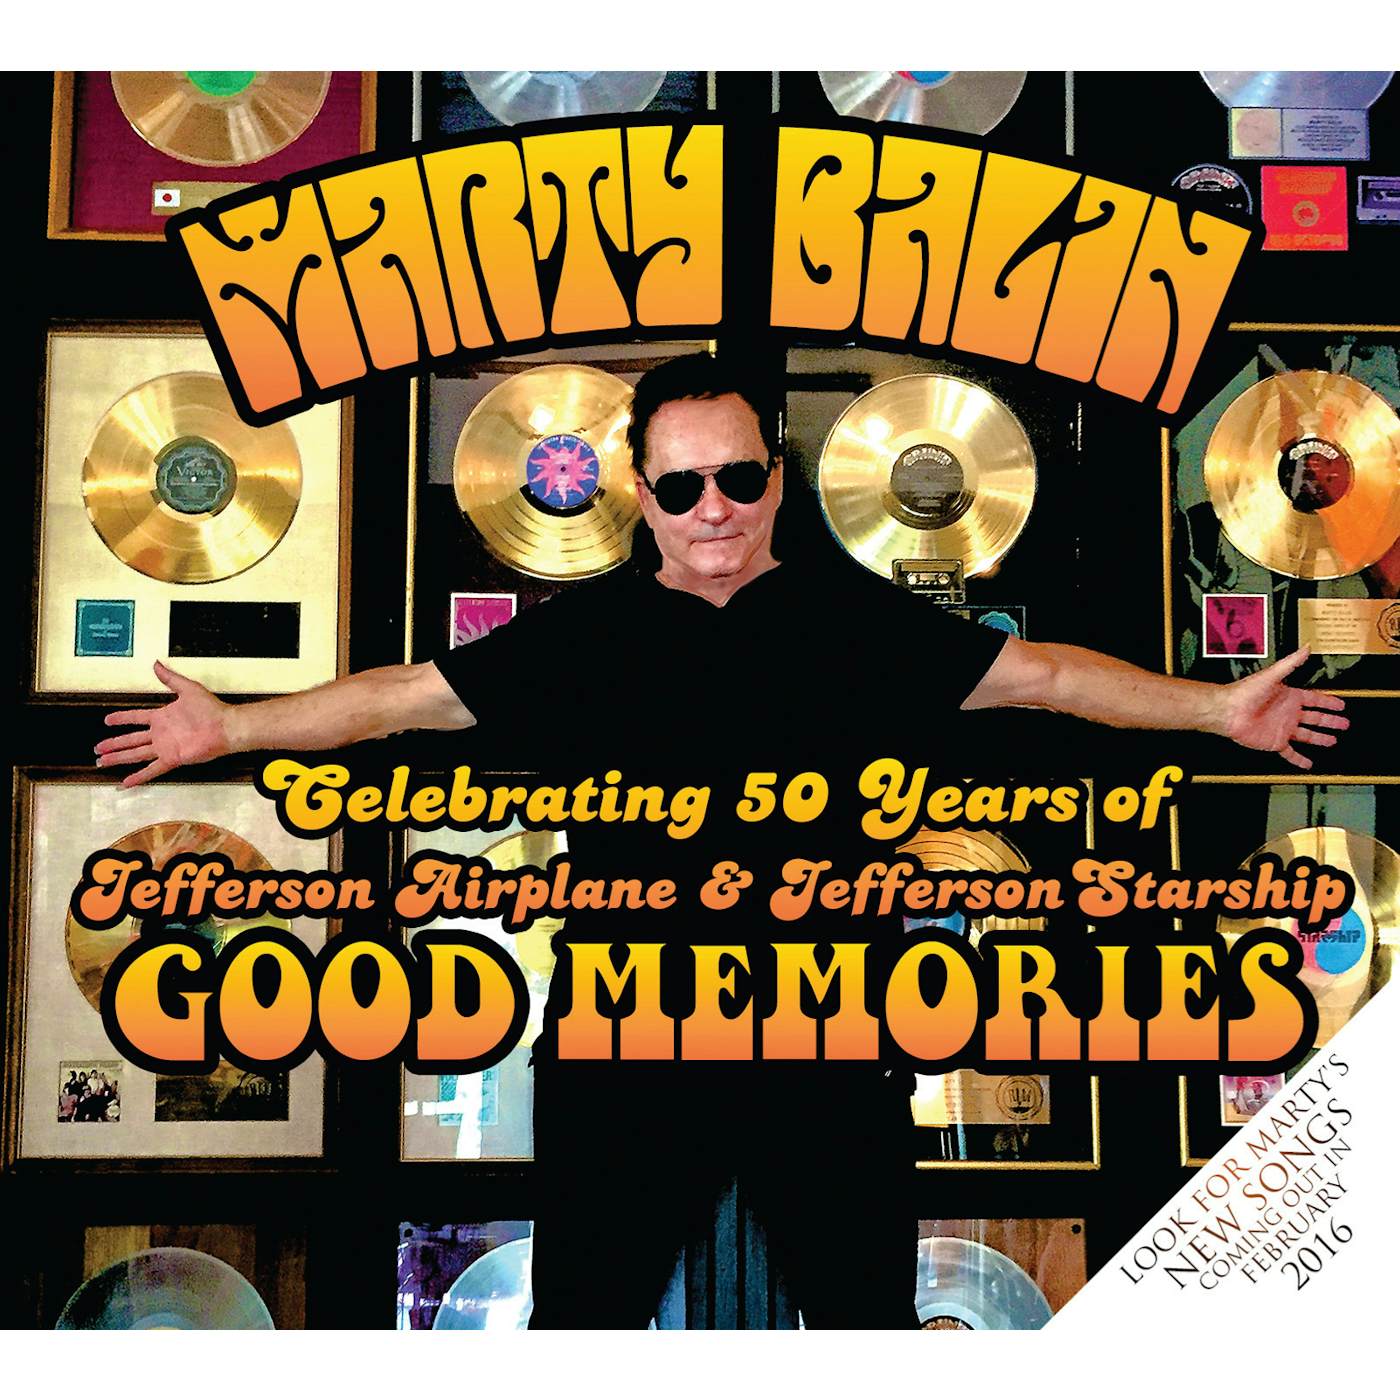 Marty Balin GOOD MEMORIES CD